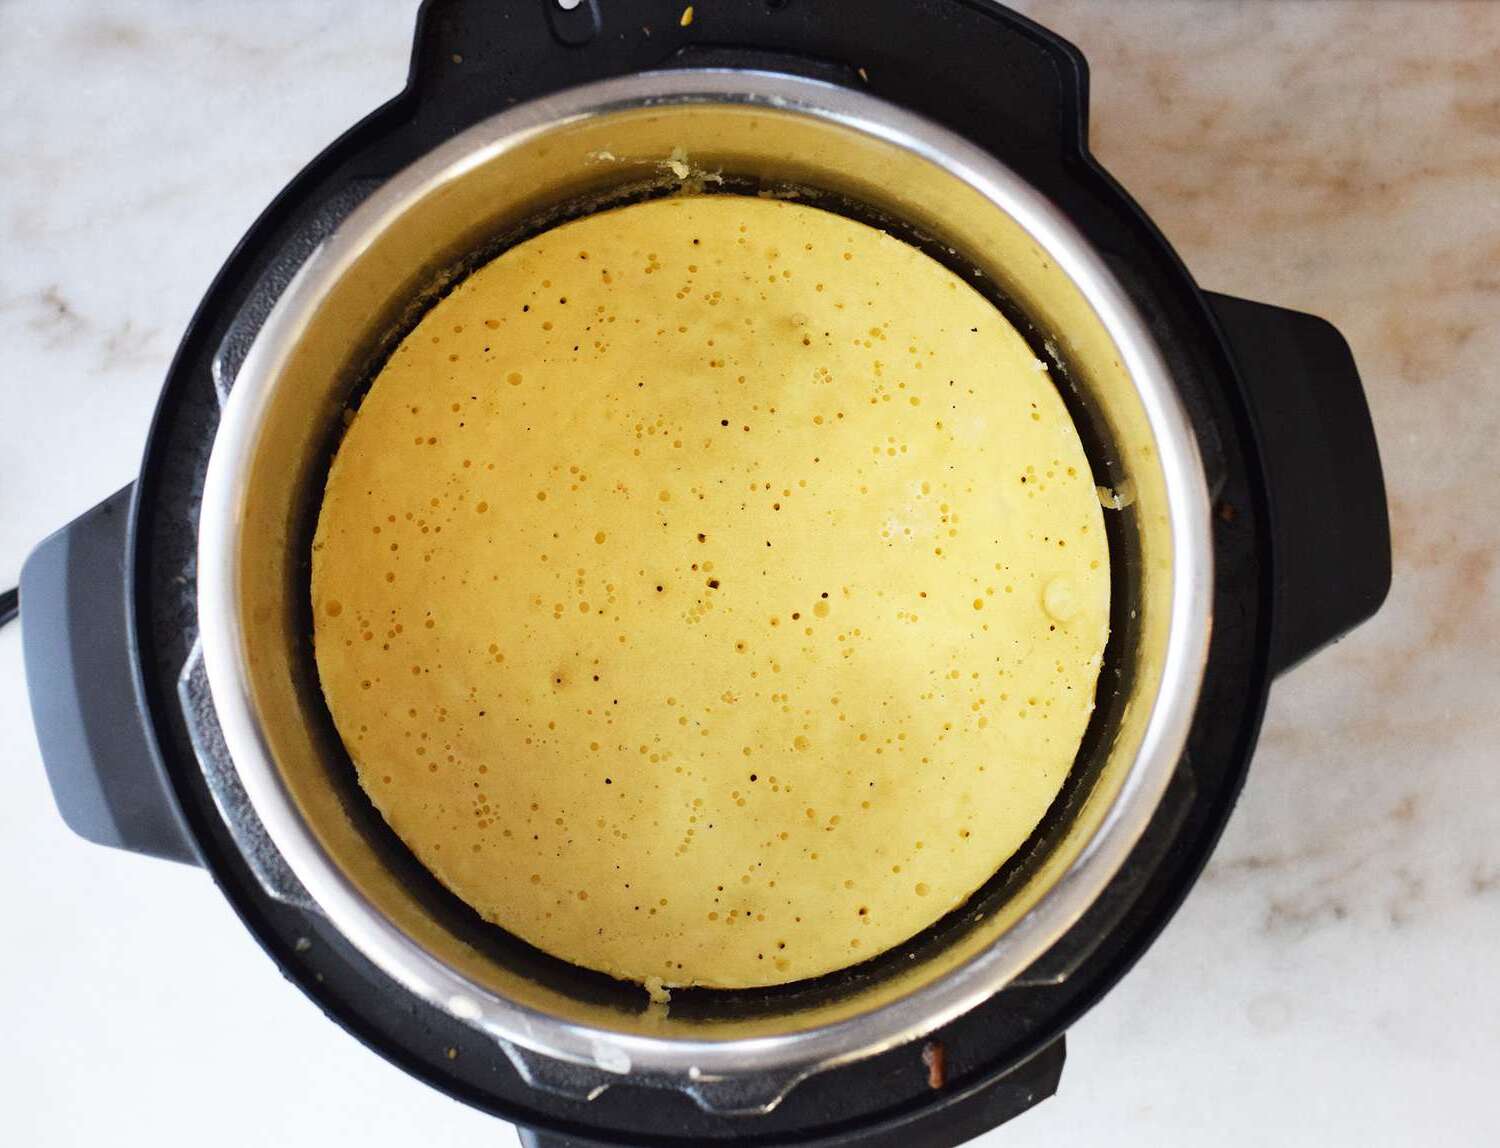 How to Make a Pancake in the Ninja Foodi Pressure Cooker